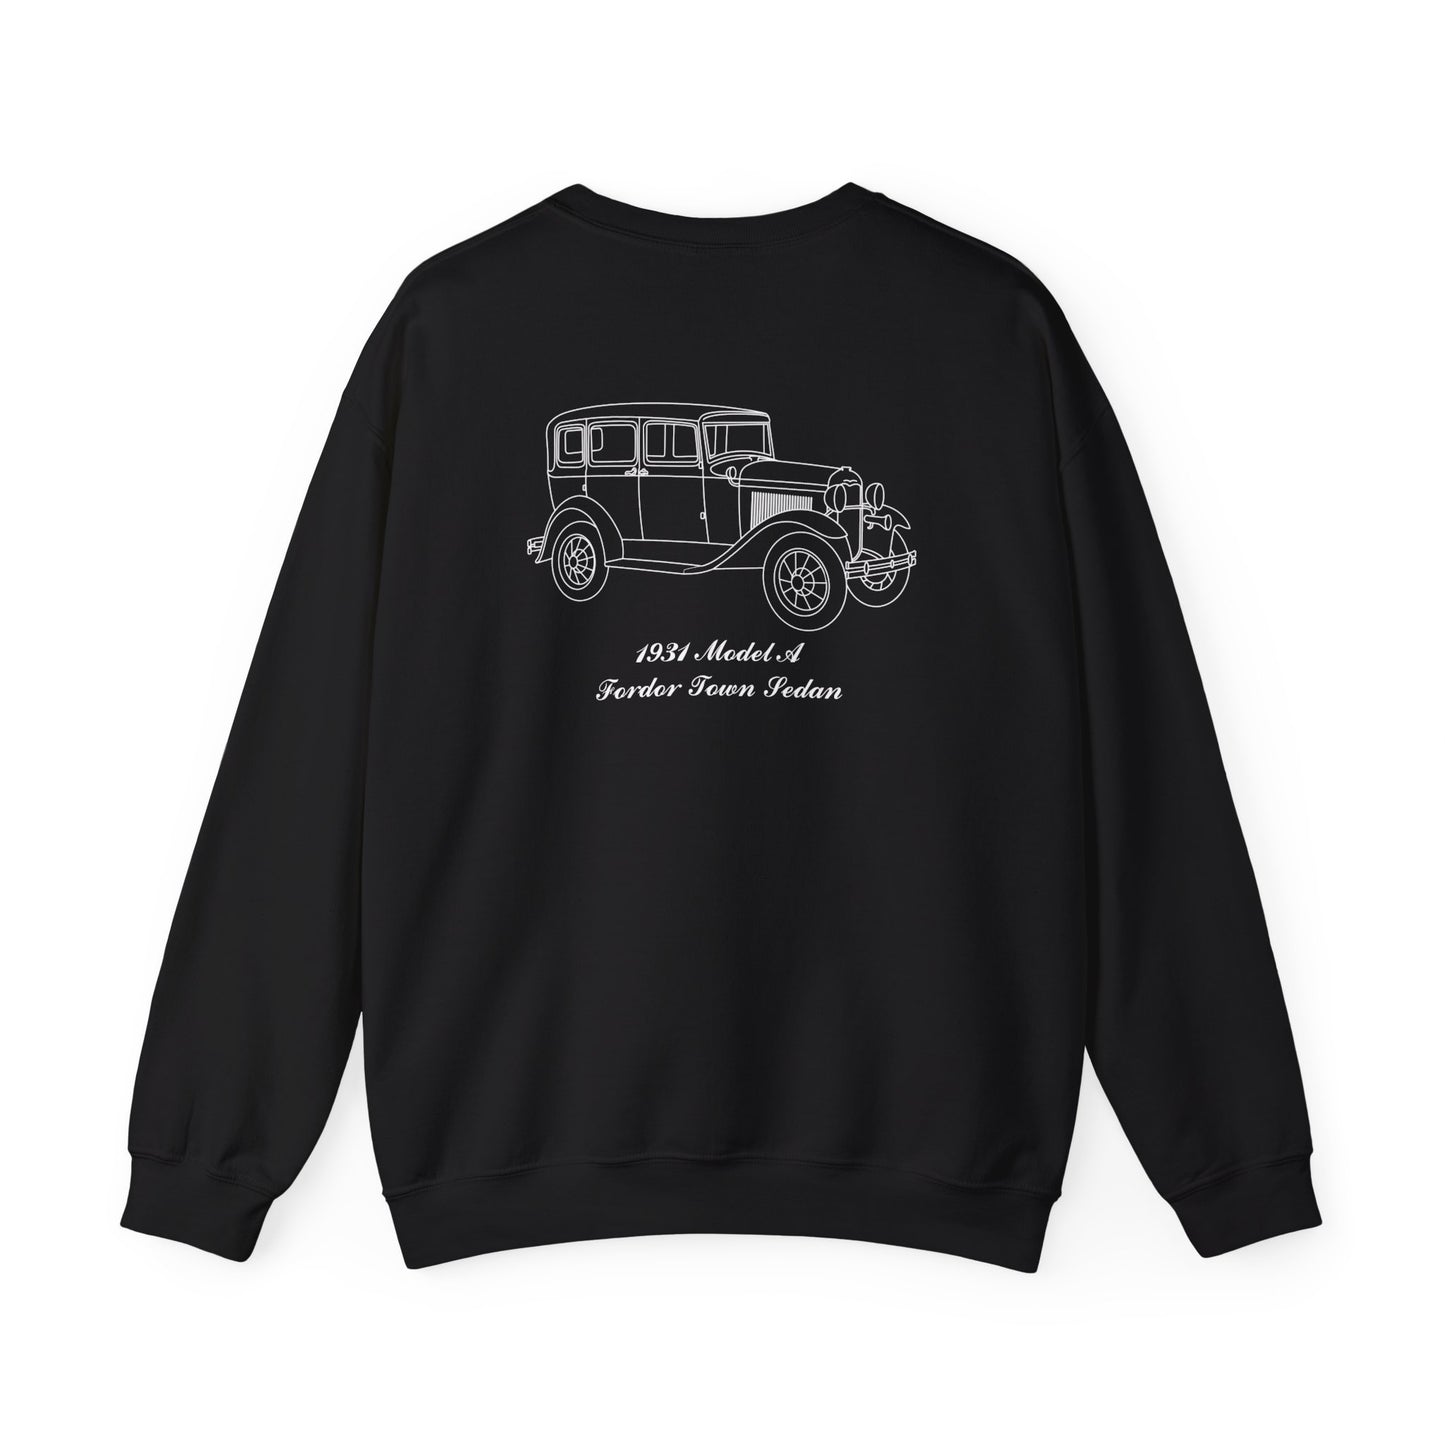 1931 Fordor Town Sedan Crewneck Sweatshirt